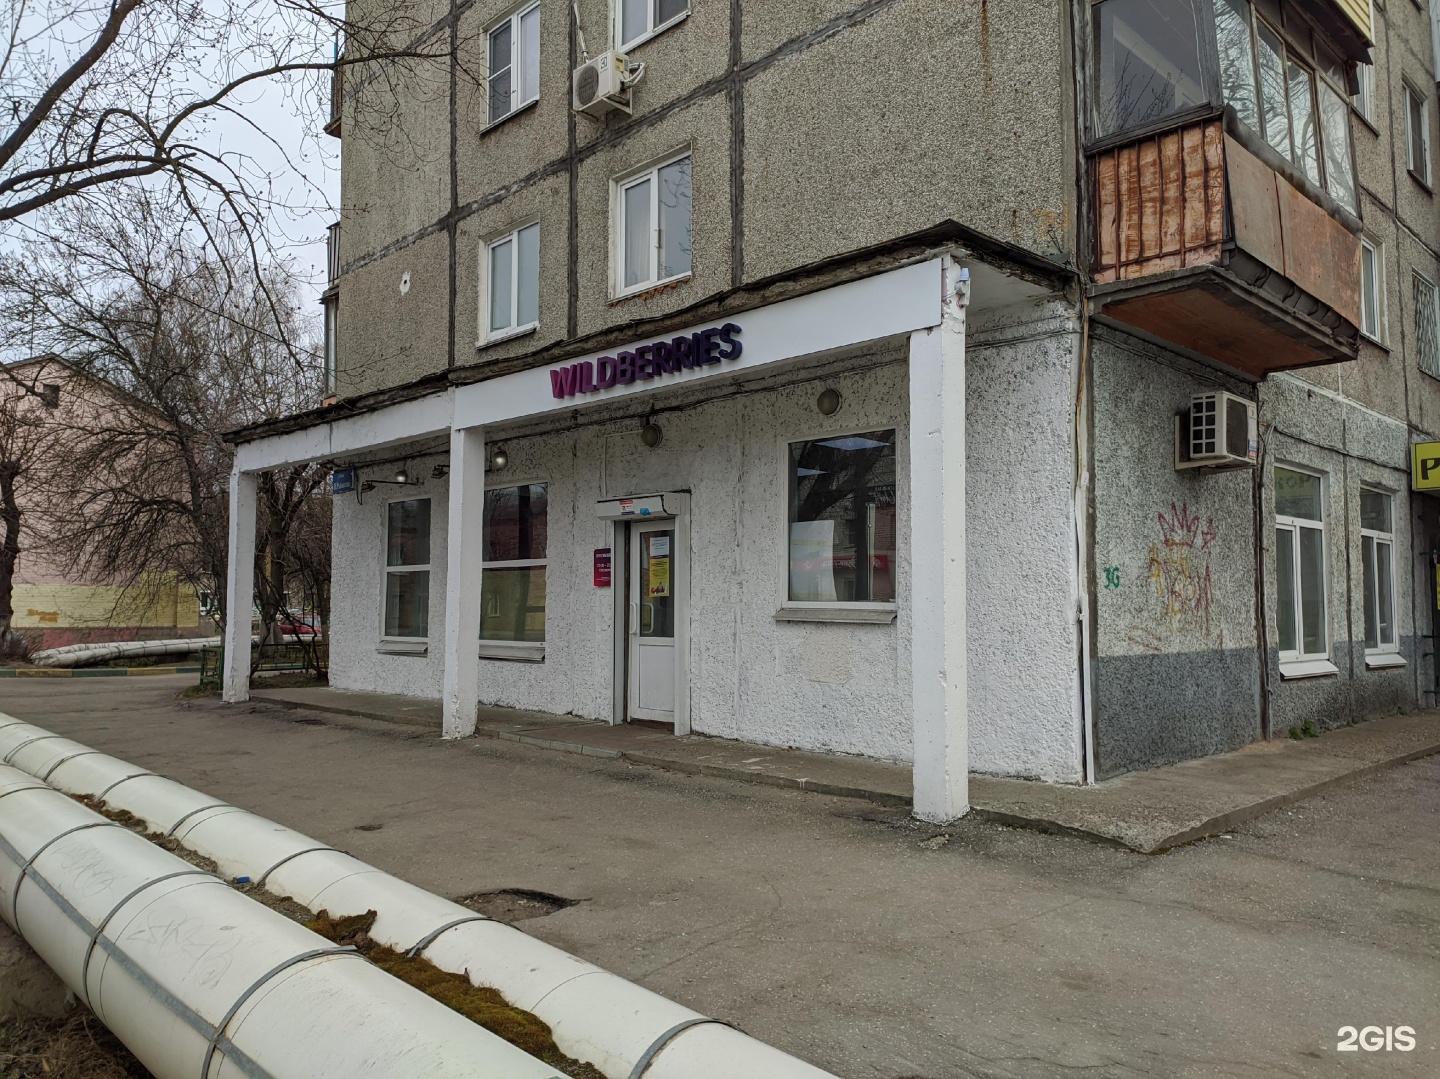 Welberess Интернет Магазин Нижний Новгород